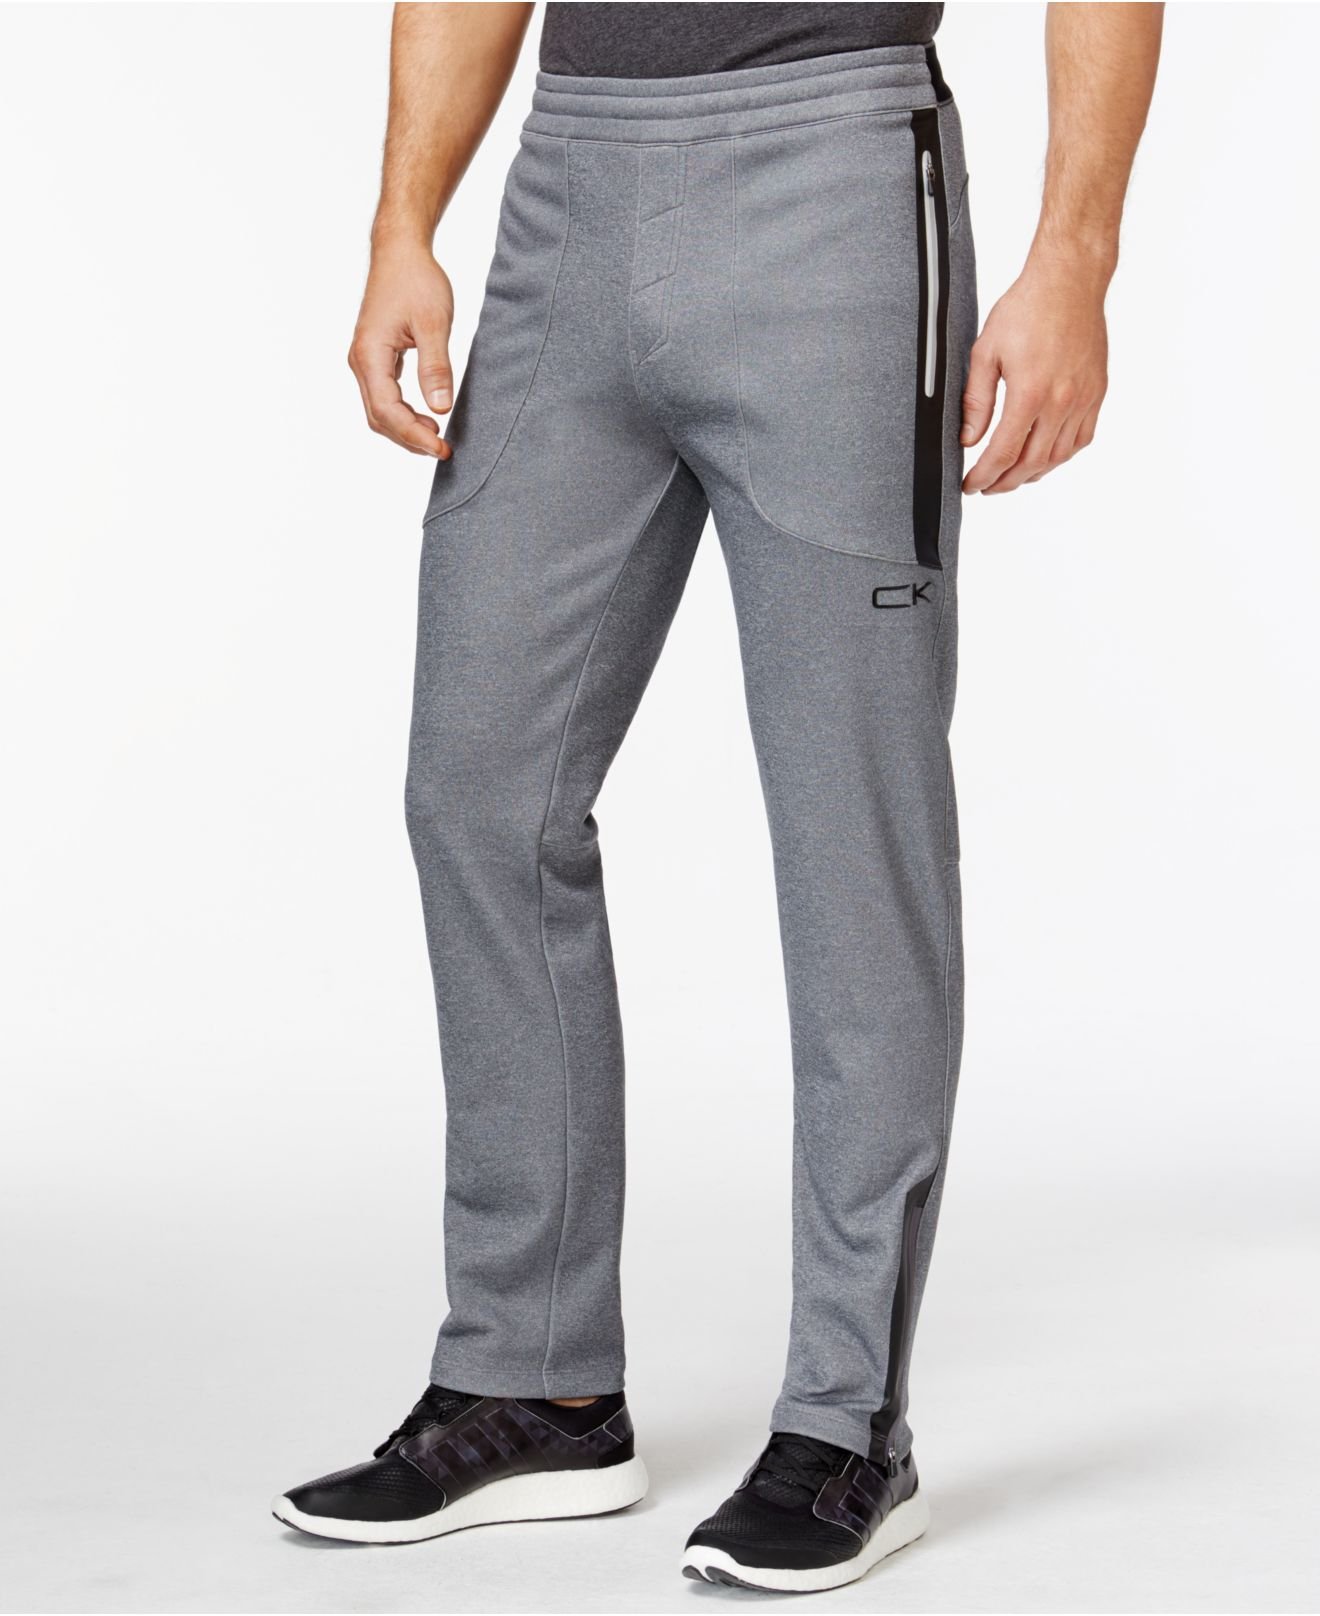 Calvin Klein Performance Sweatpants in Gray for Men - Lyst